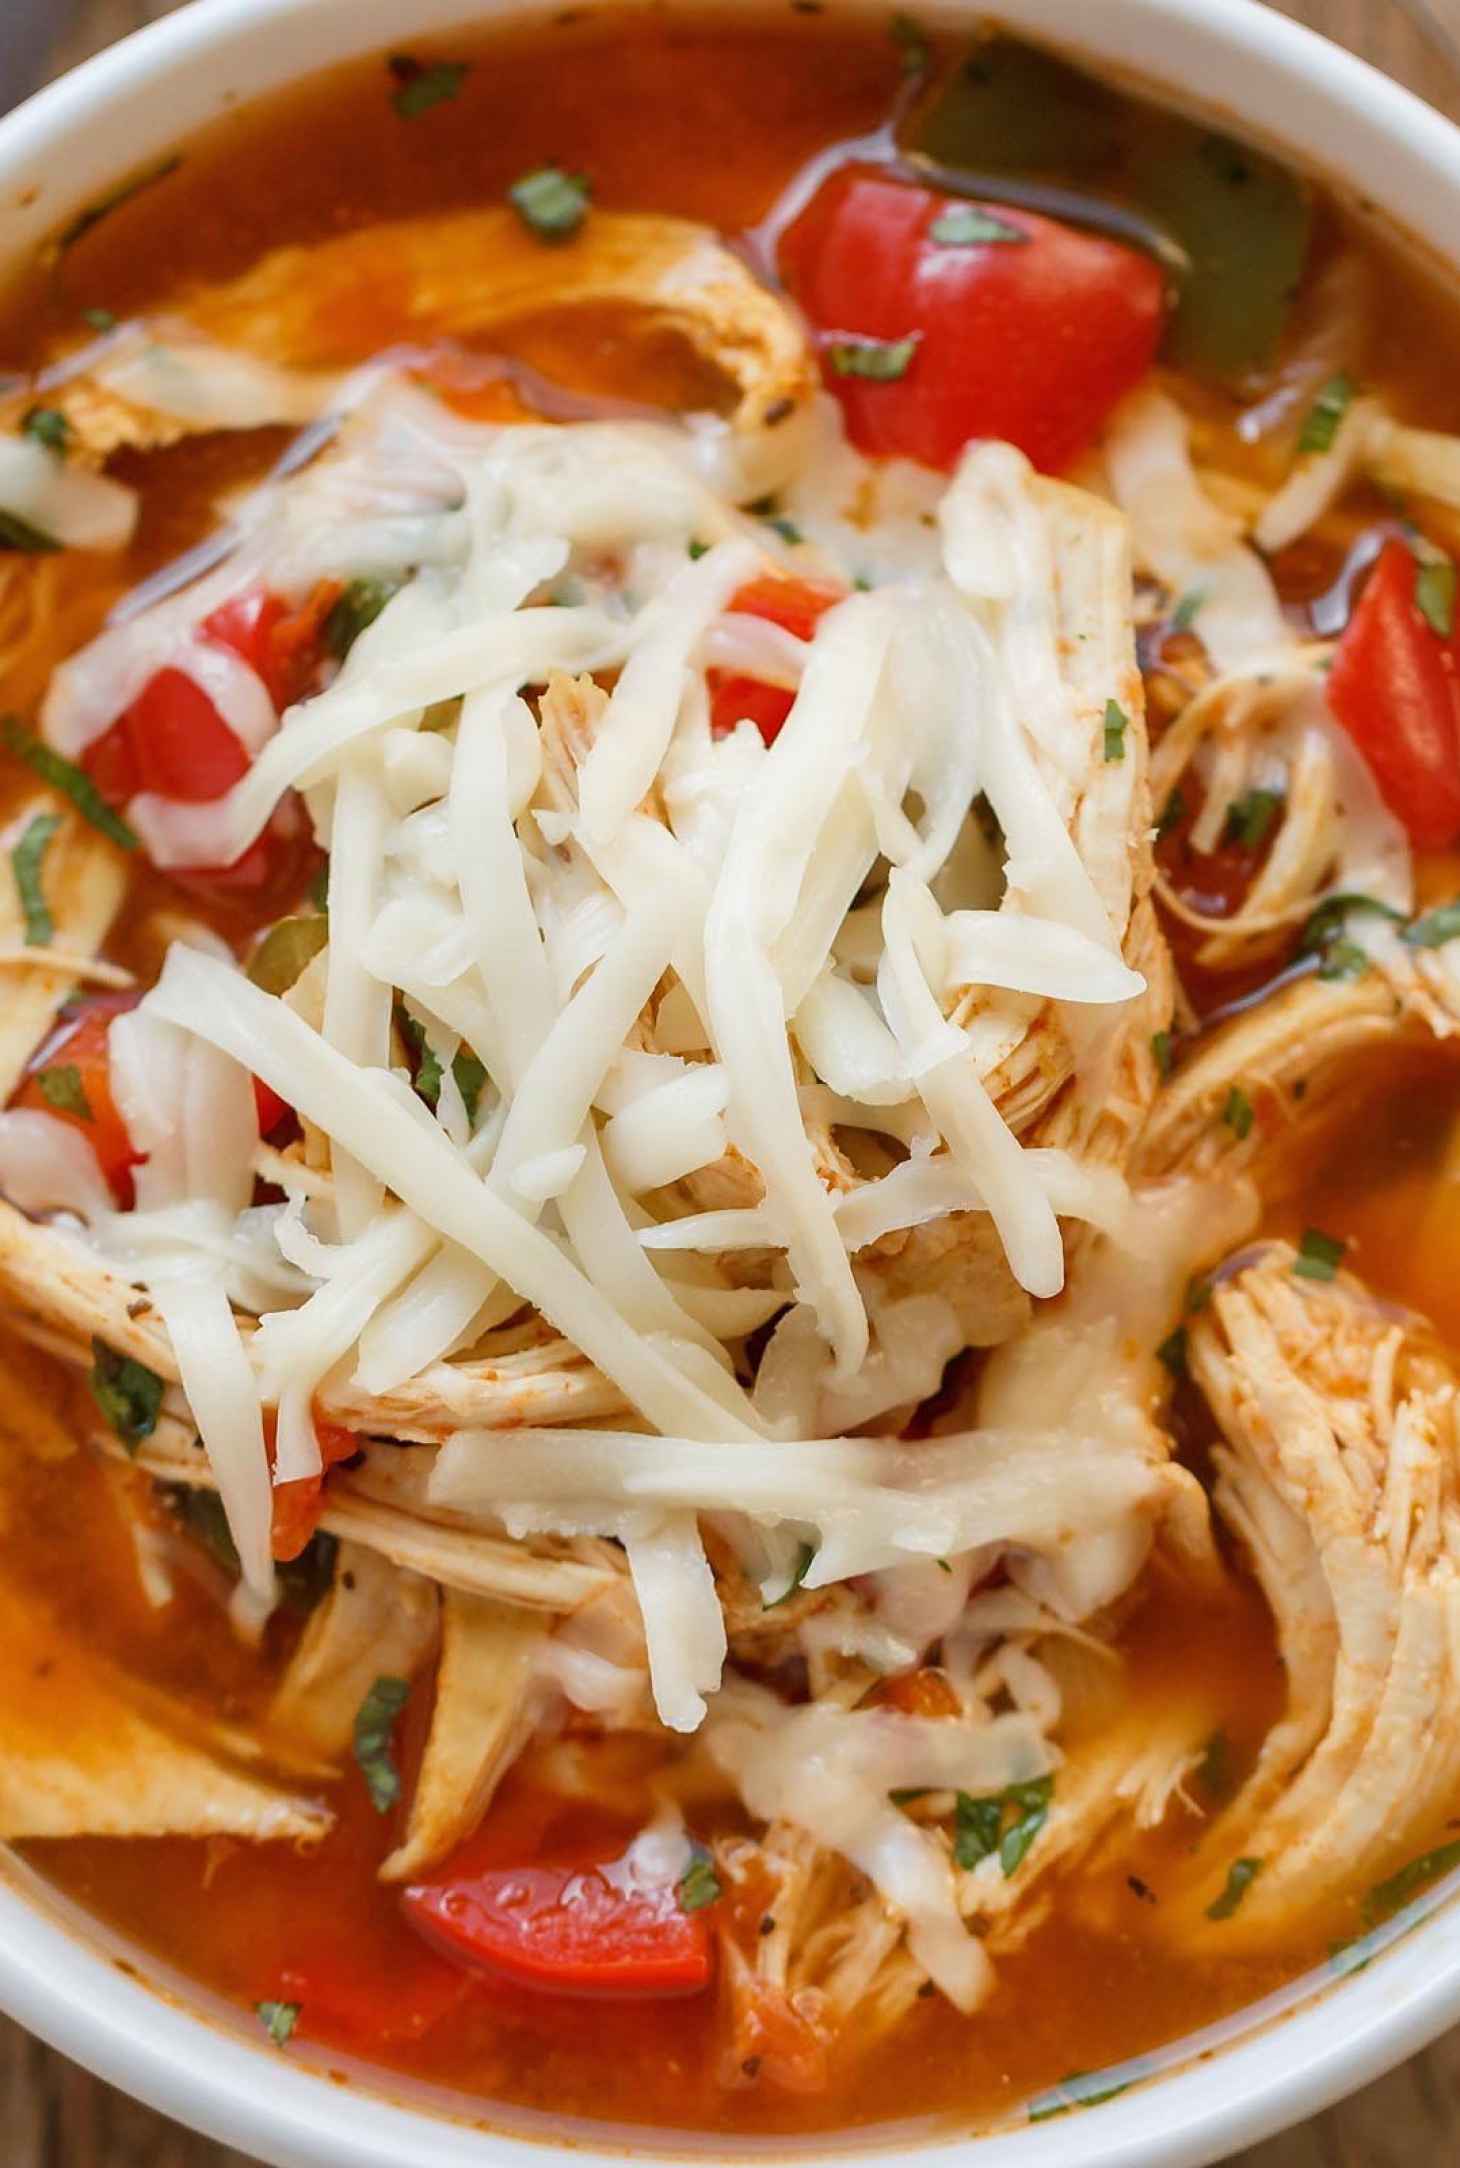 Instant Pot Fajita Chicken Soup - #recipe by #eatwell101 - https://www.eatwell101.com/instant-pot-fajita-chicken-soup-recipe